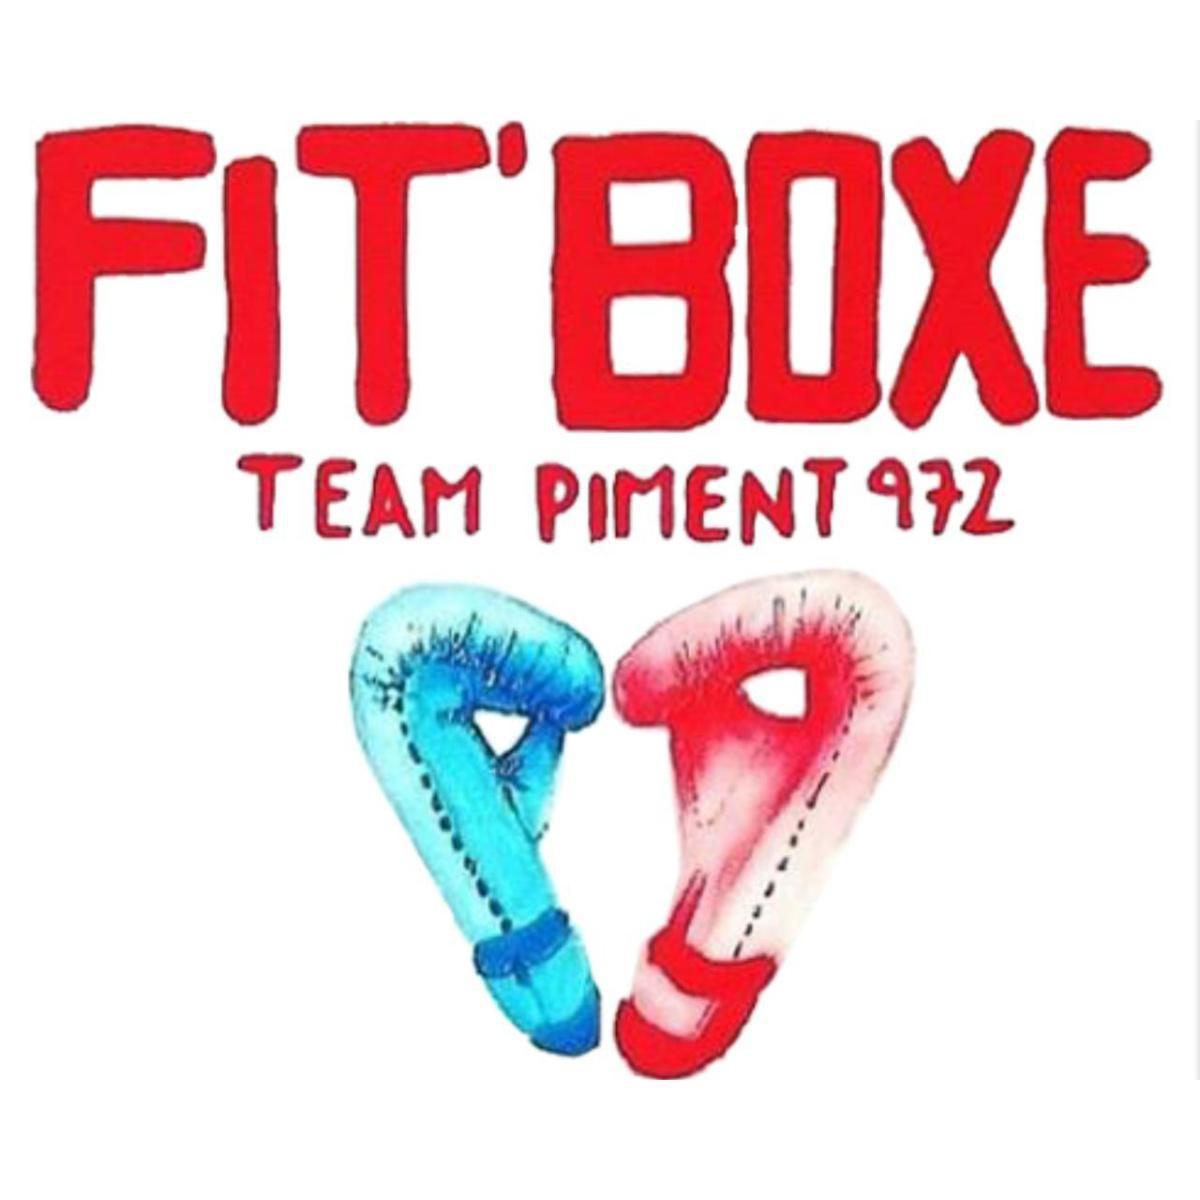 Fitboxe Team Piment 972